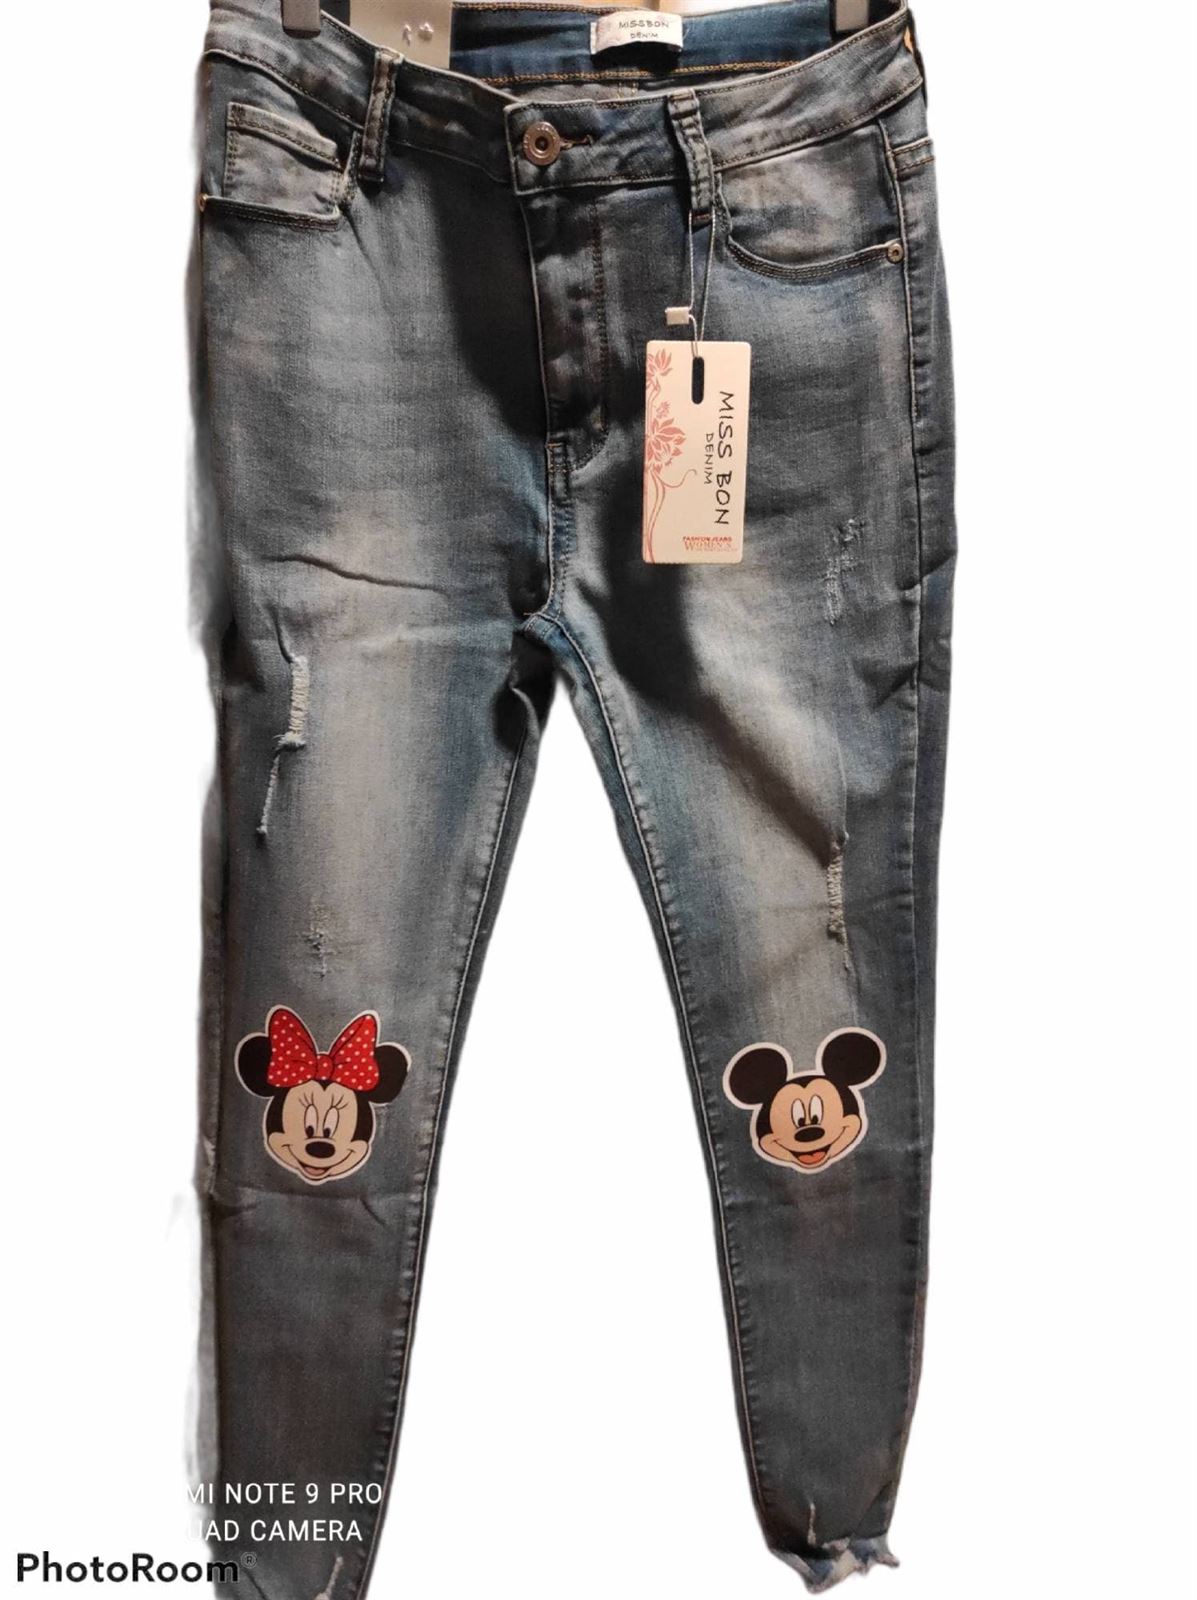 Pantalones vaqueros Disney - Imagen 1